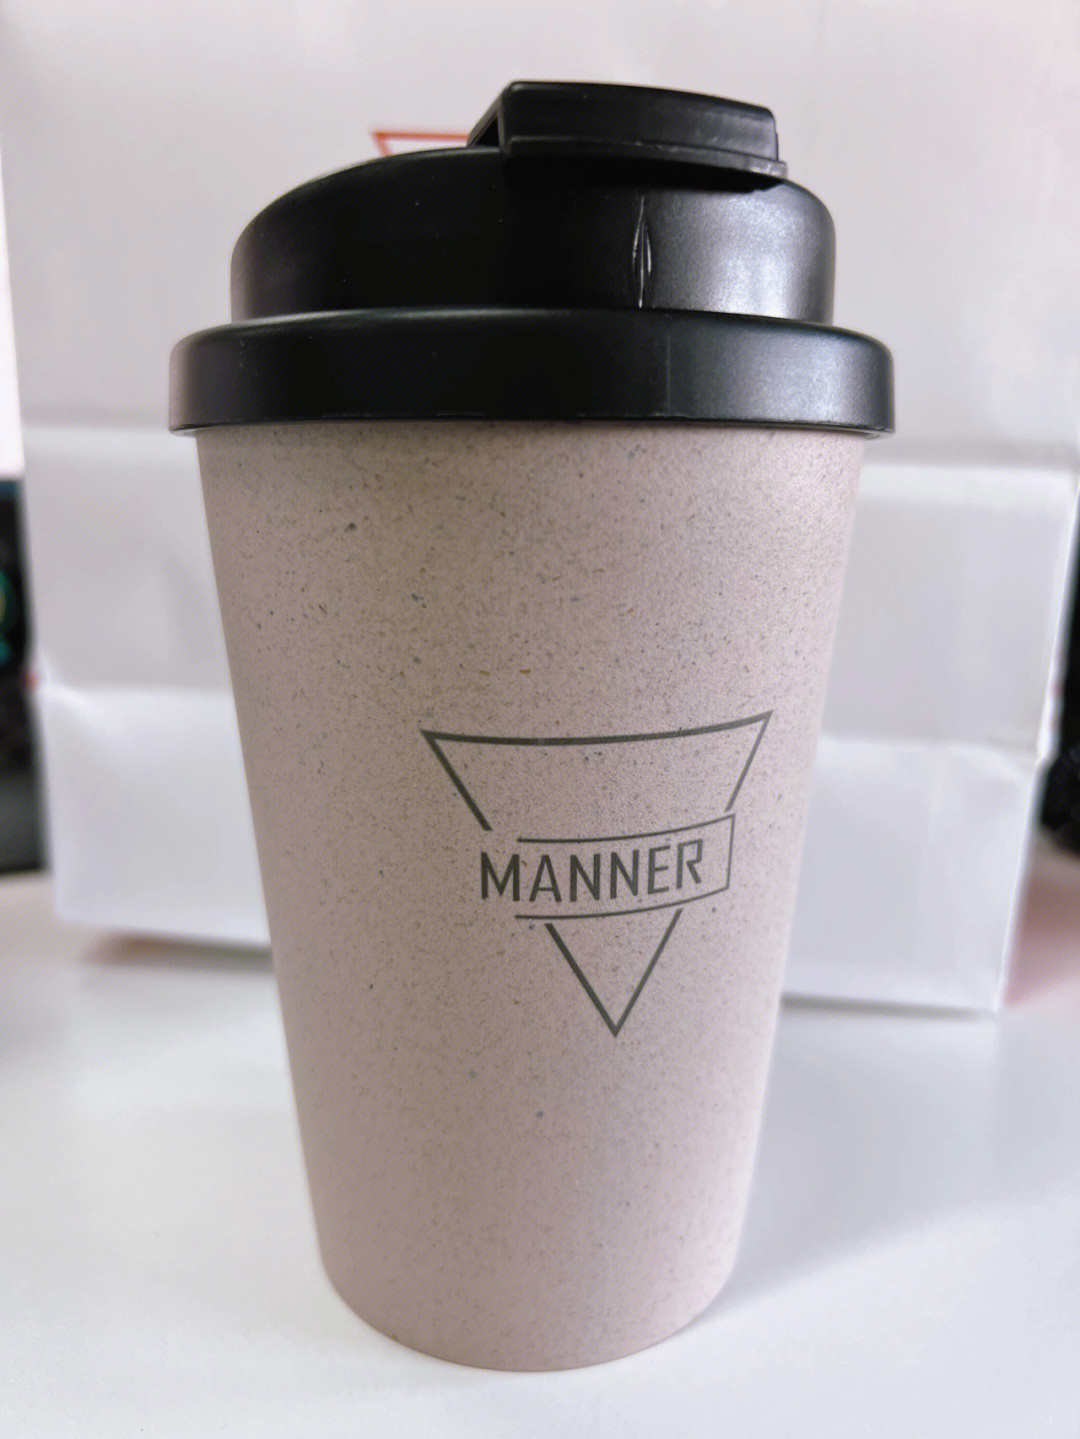 manner咖啡渣杯图片